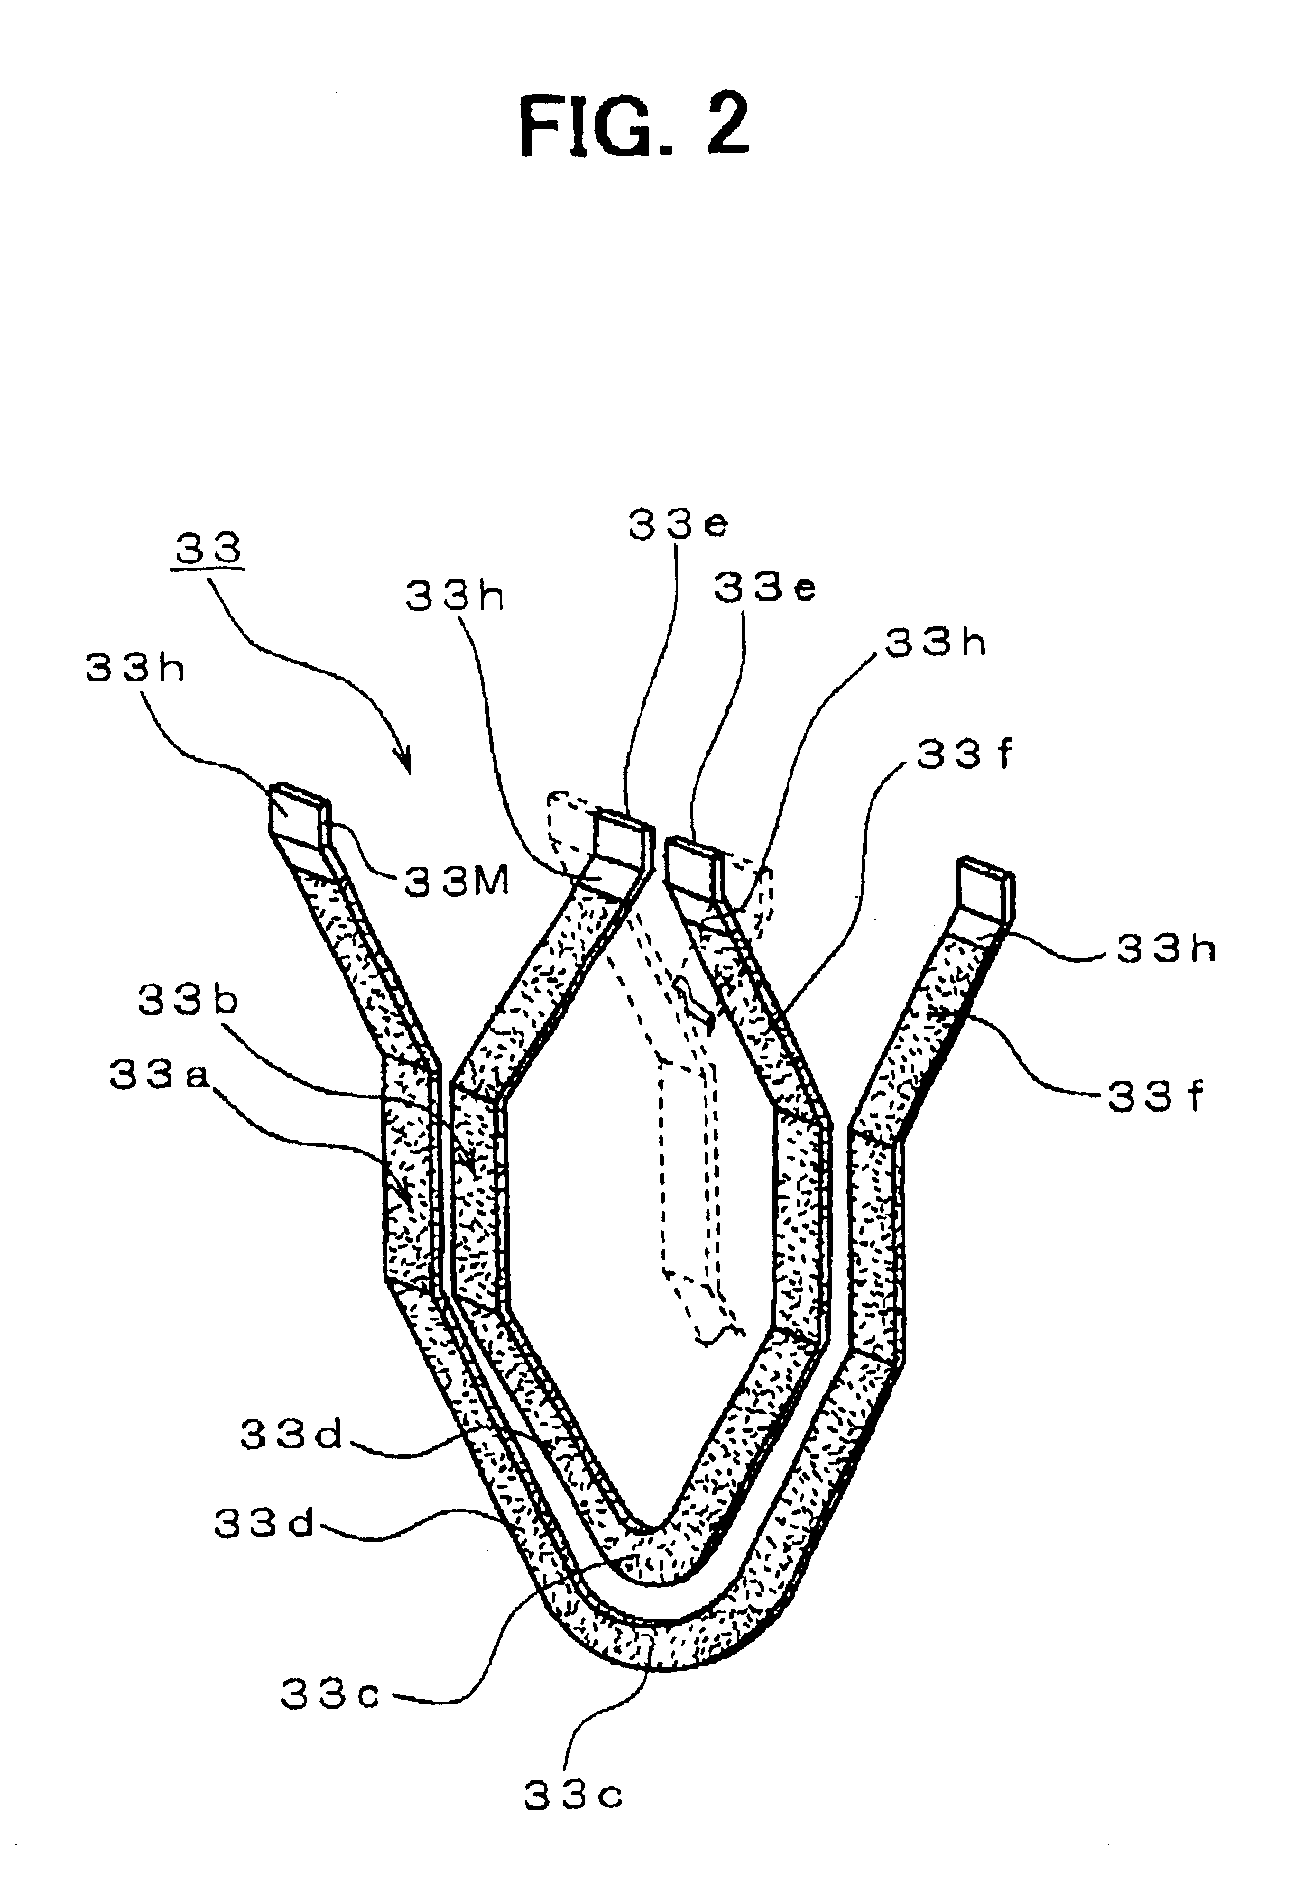 Stator arrangement of rotary electric machine